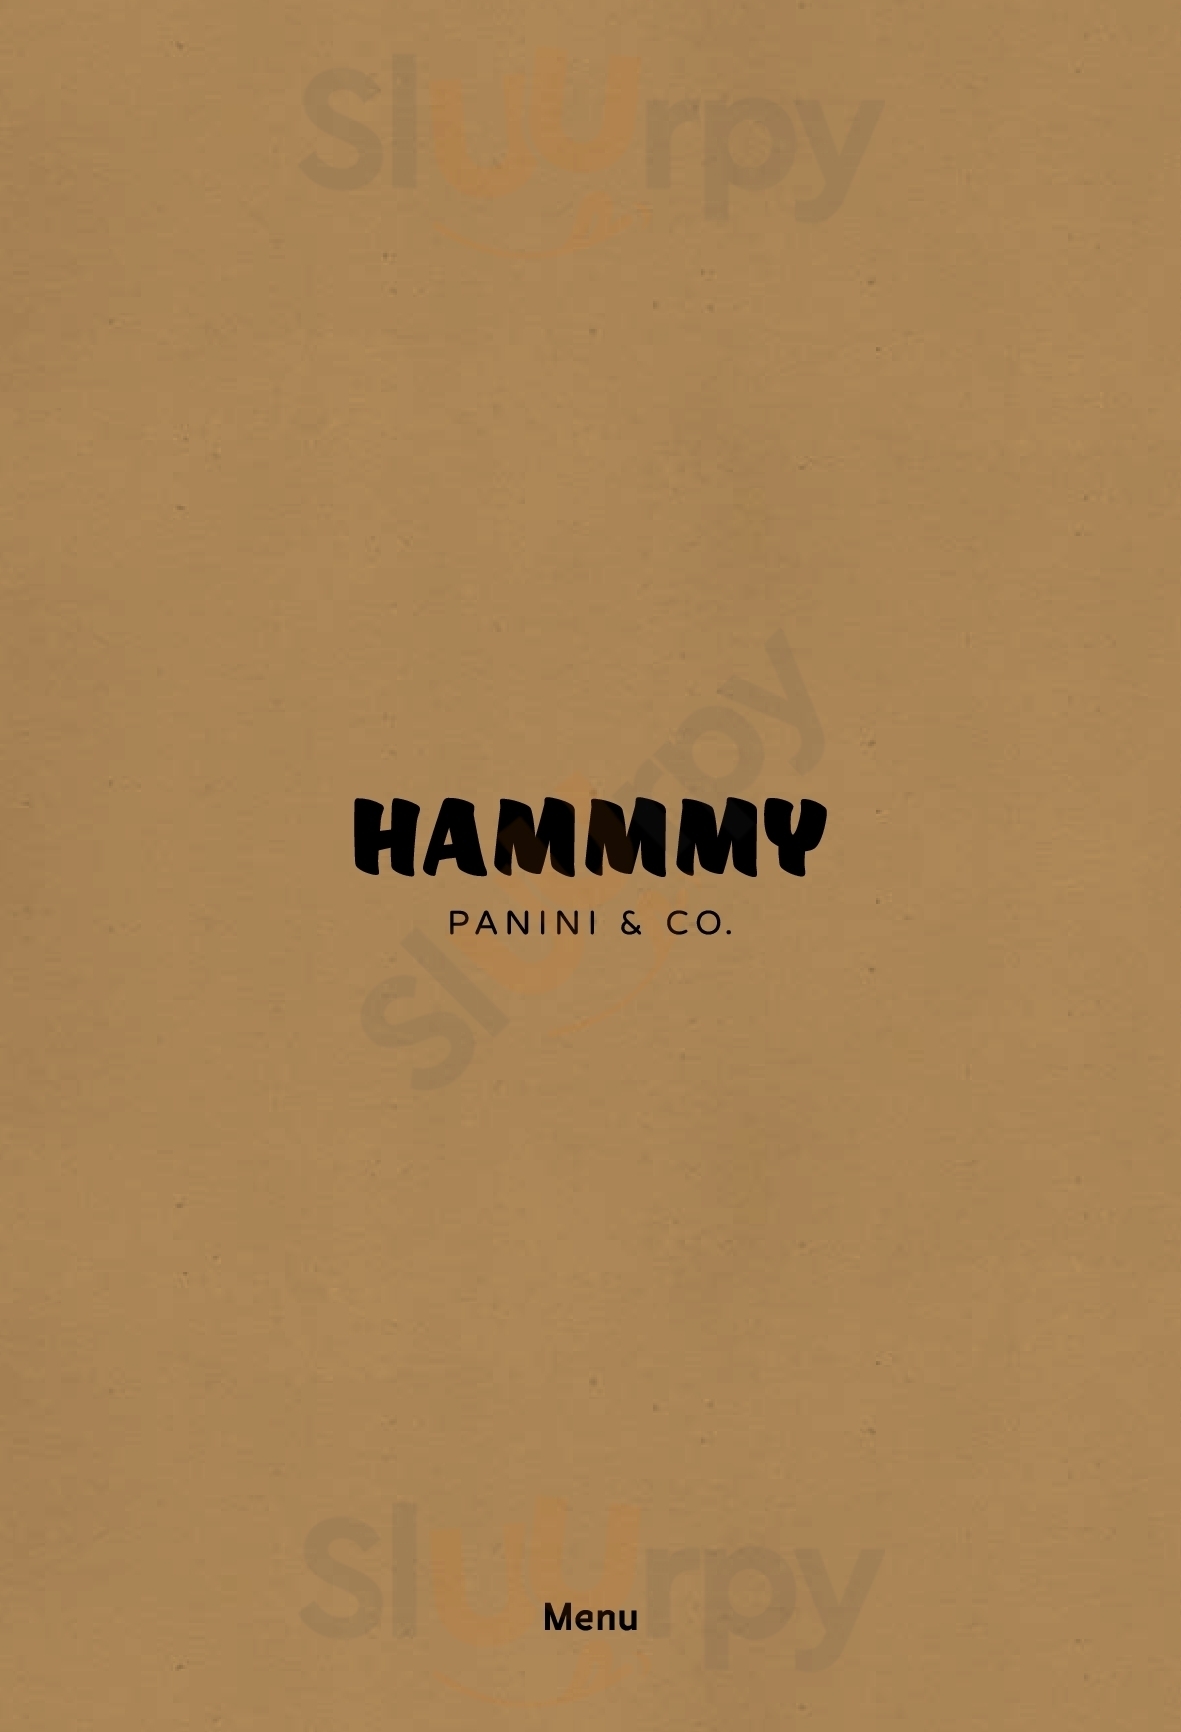 Hammmy Panini & Co. Noci menù 1 pagina